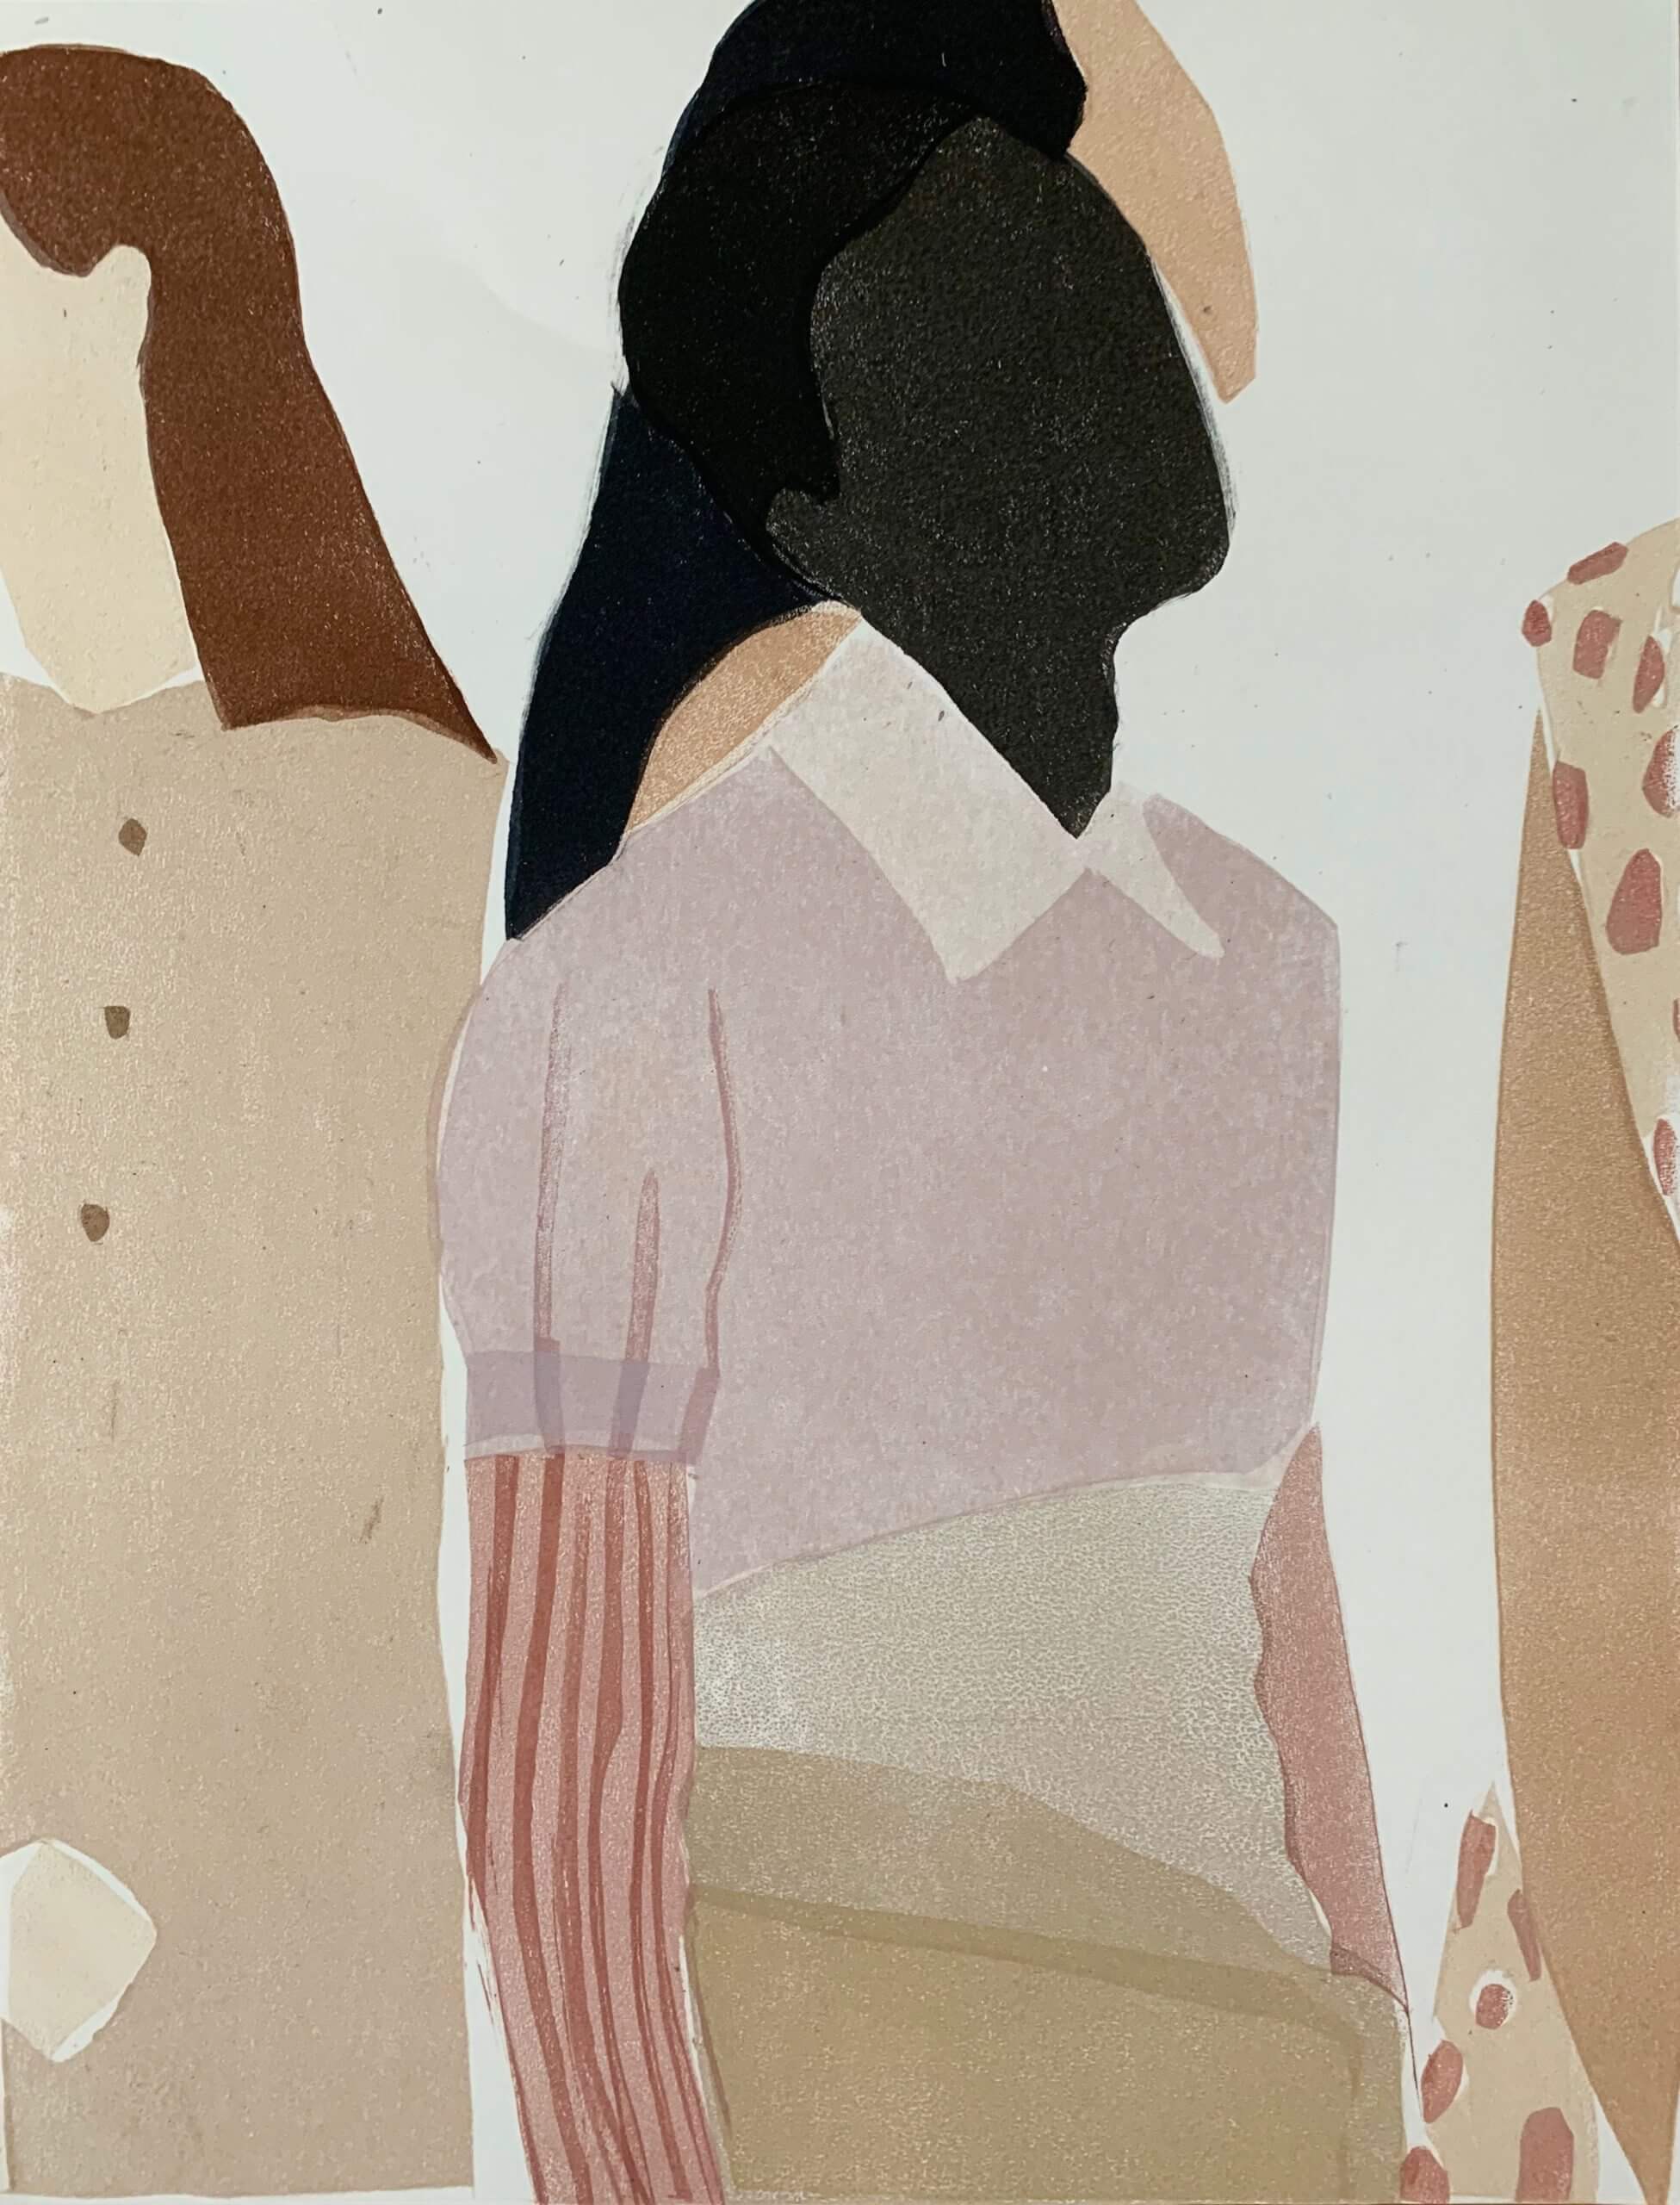 An artwork depicting women wearing pastel-colored apparel